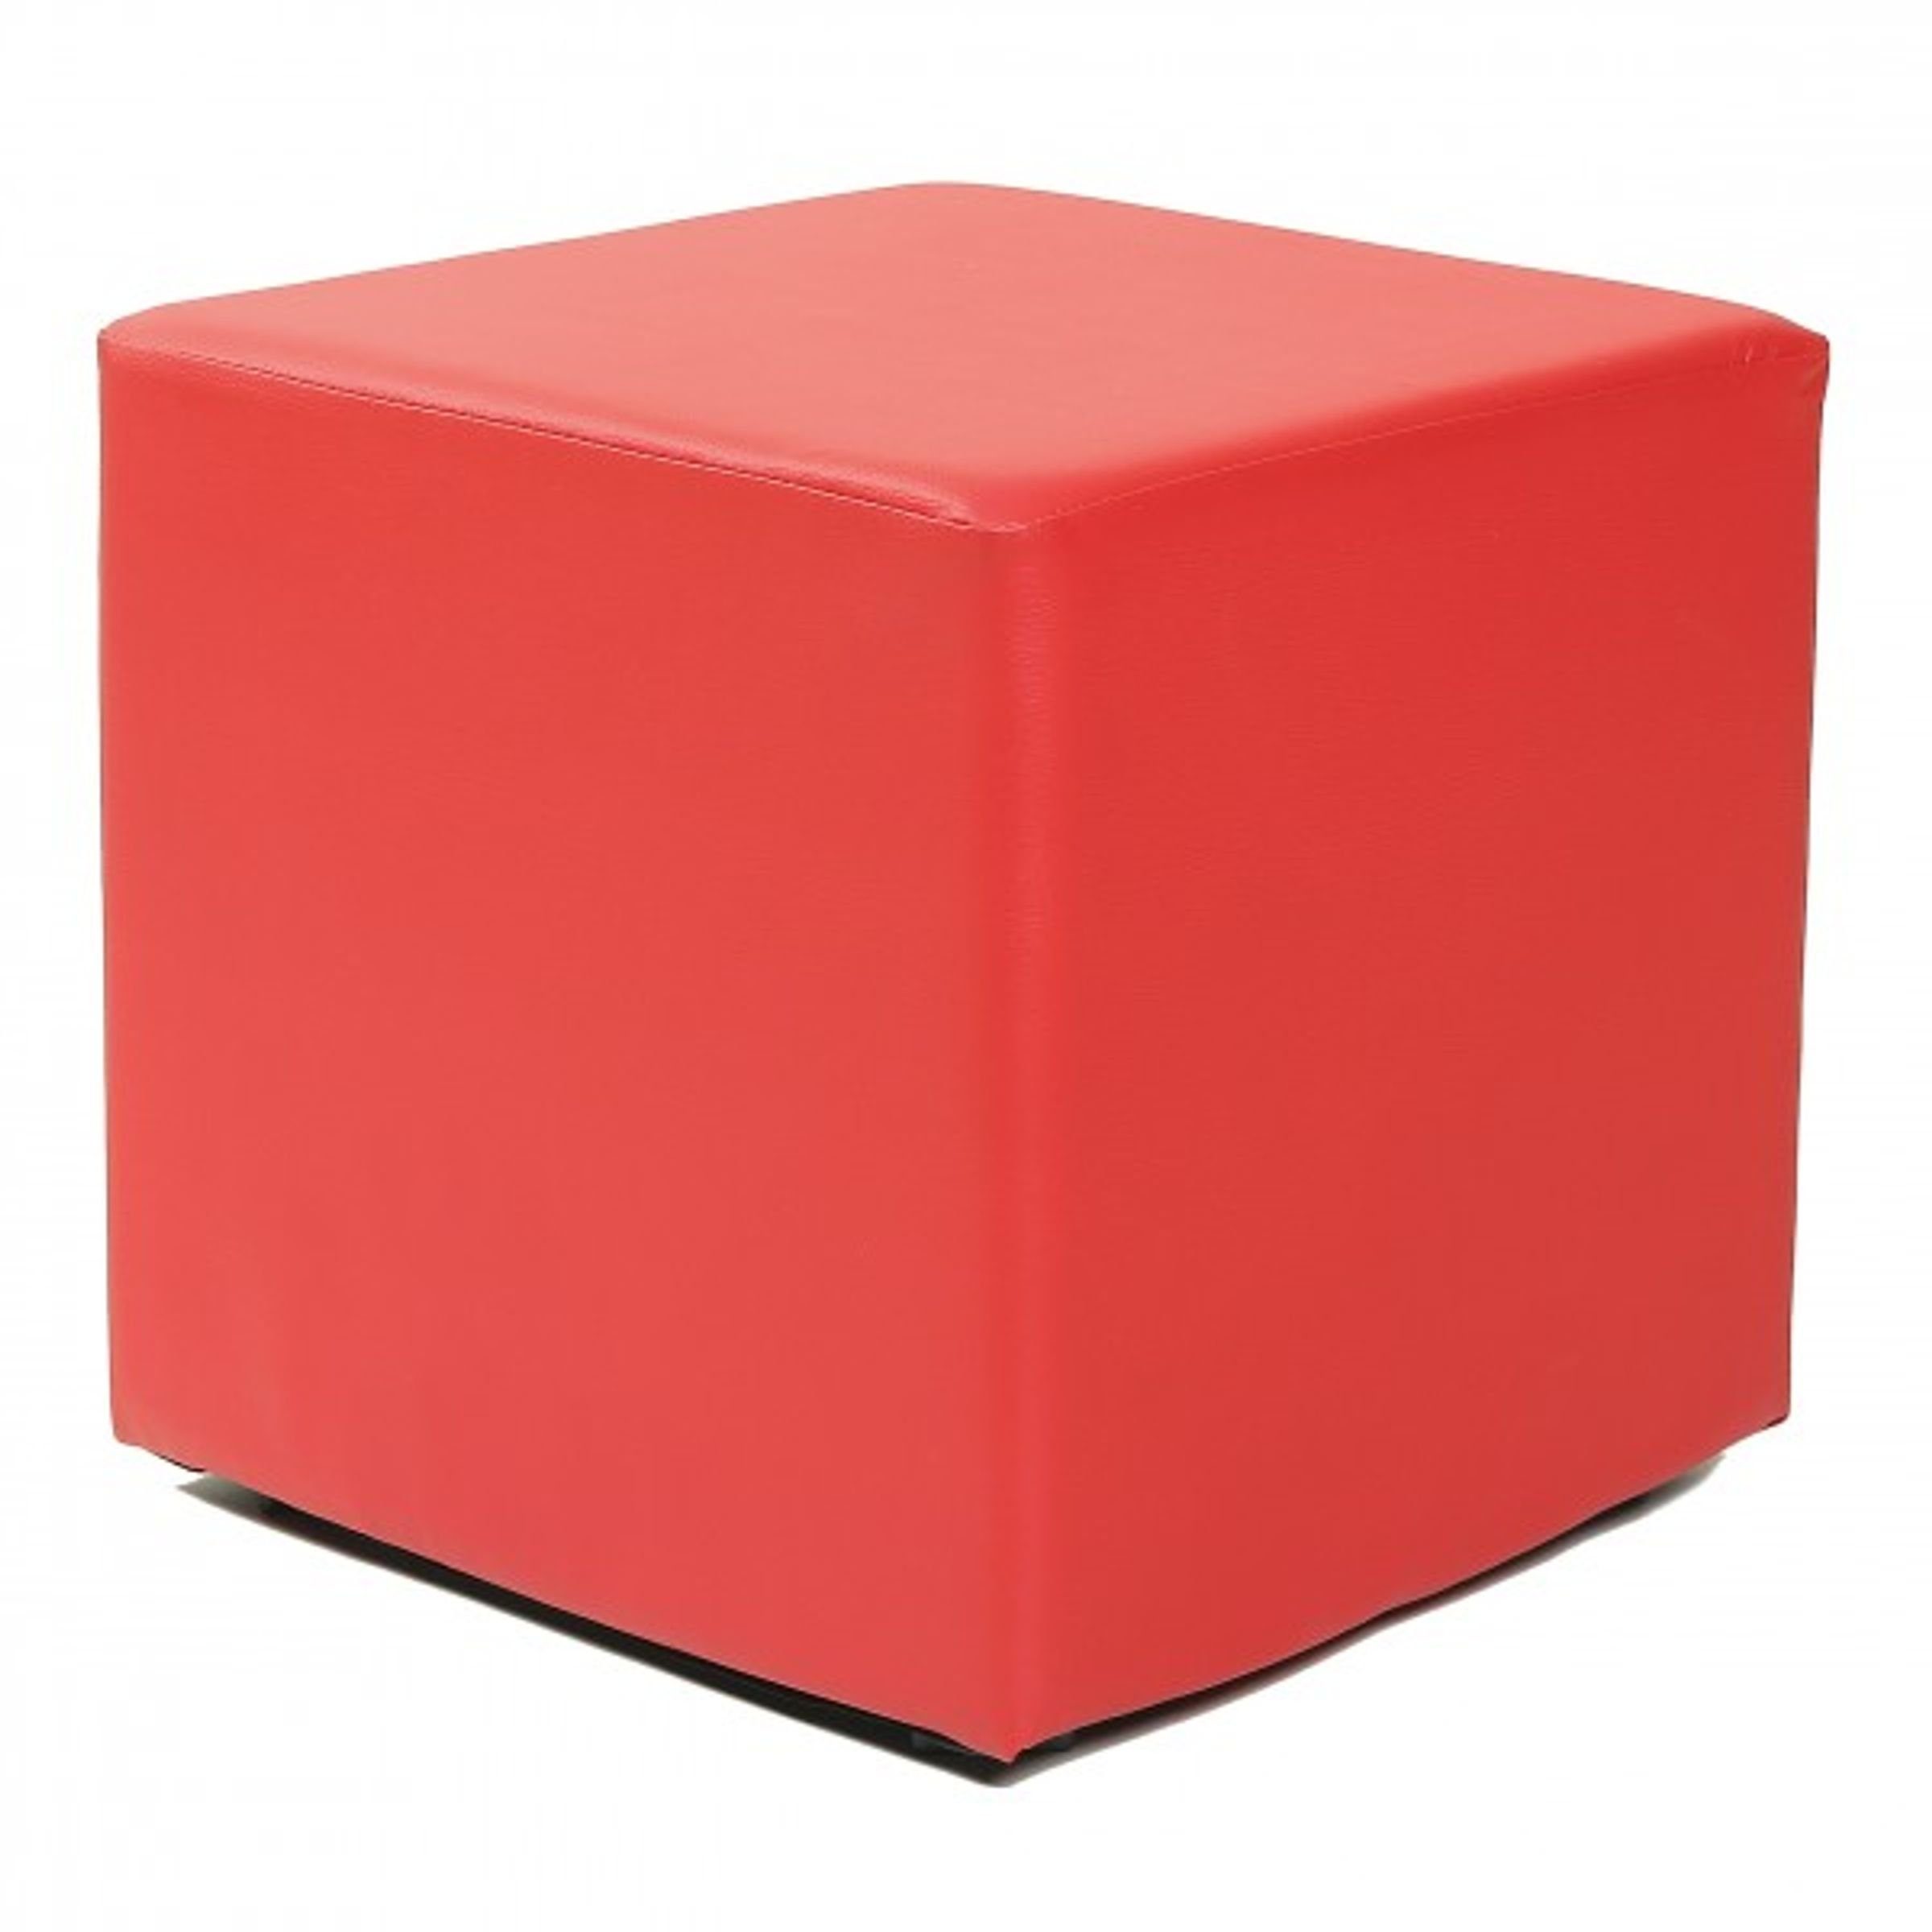 Küchen-Preisbombe Polsterbank Design Sitzwürfel Kubus Hocker Kunstleder modern 45x45x45 cm rot